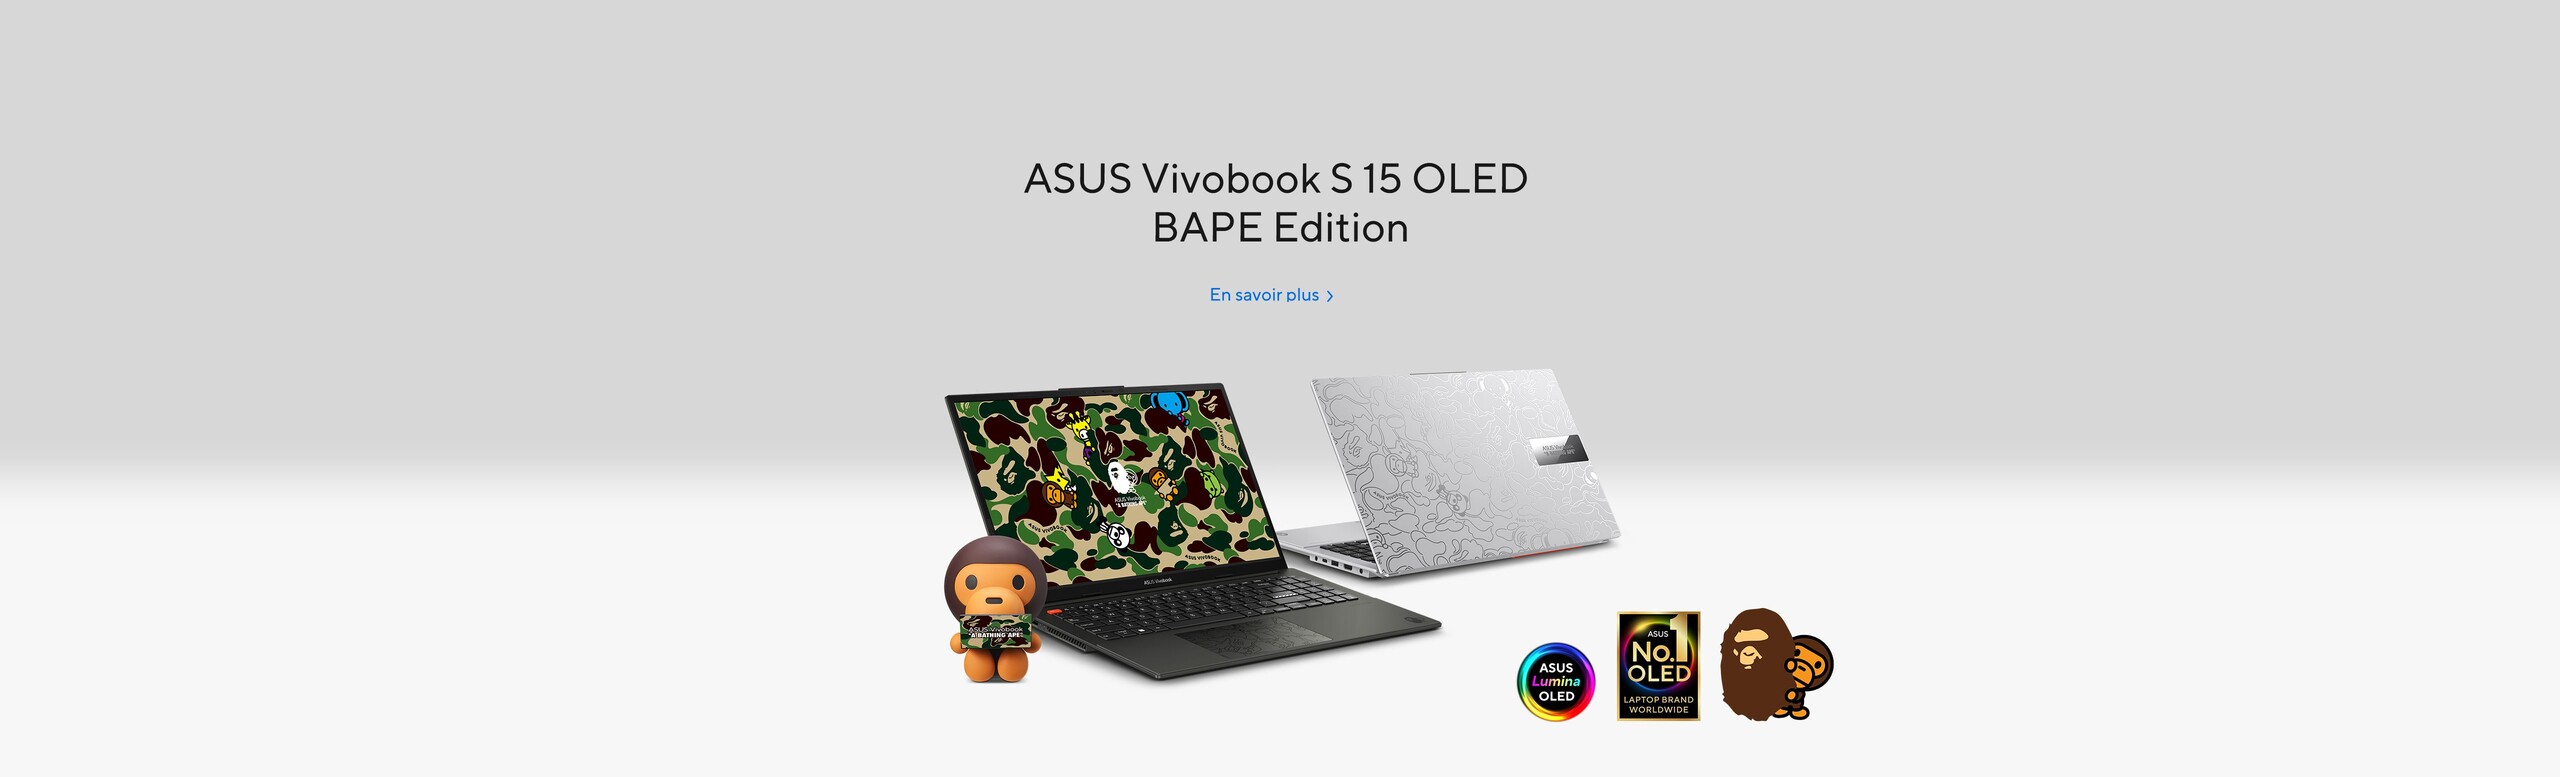 Vivobook S15 OLED BAPE Edition